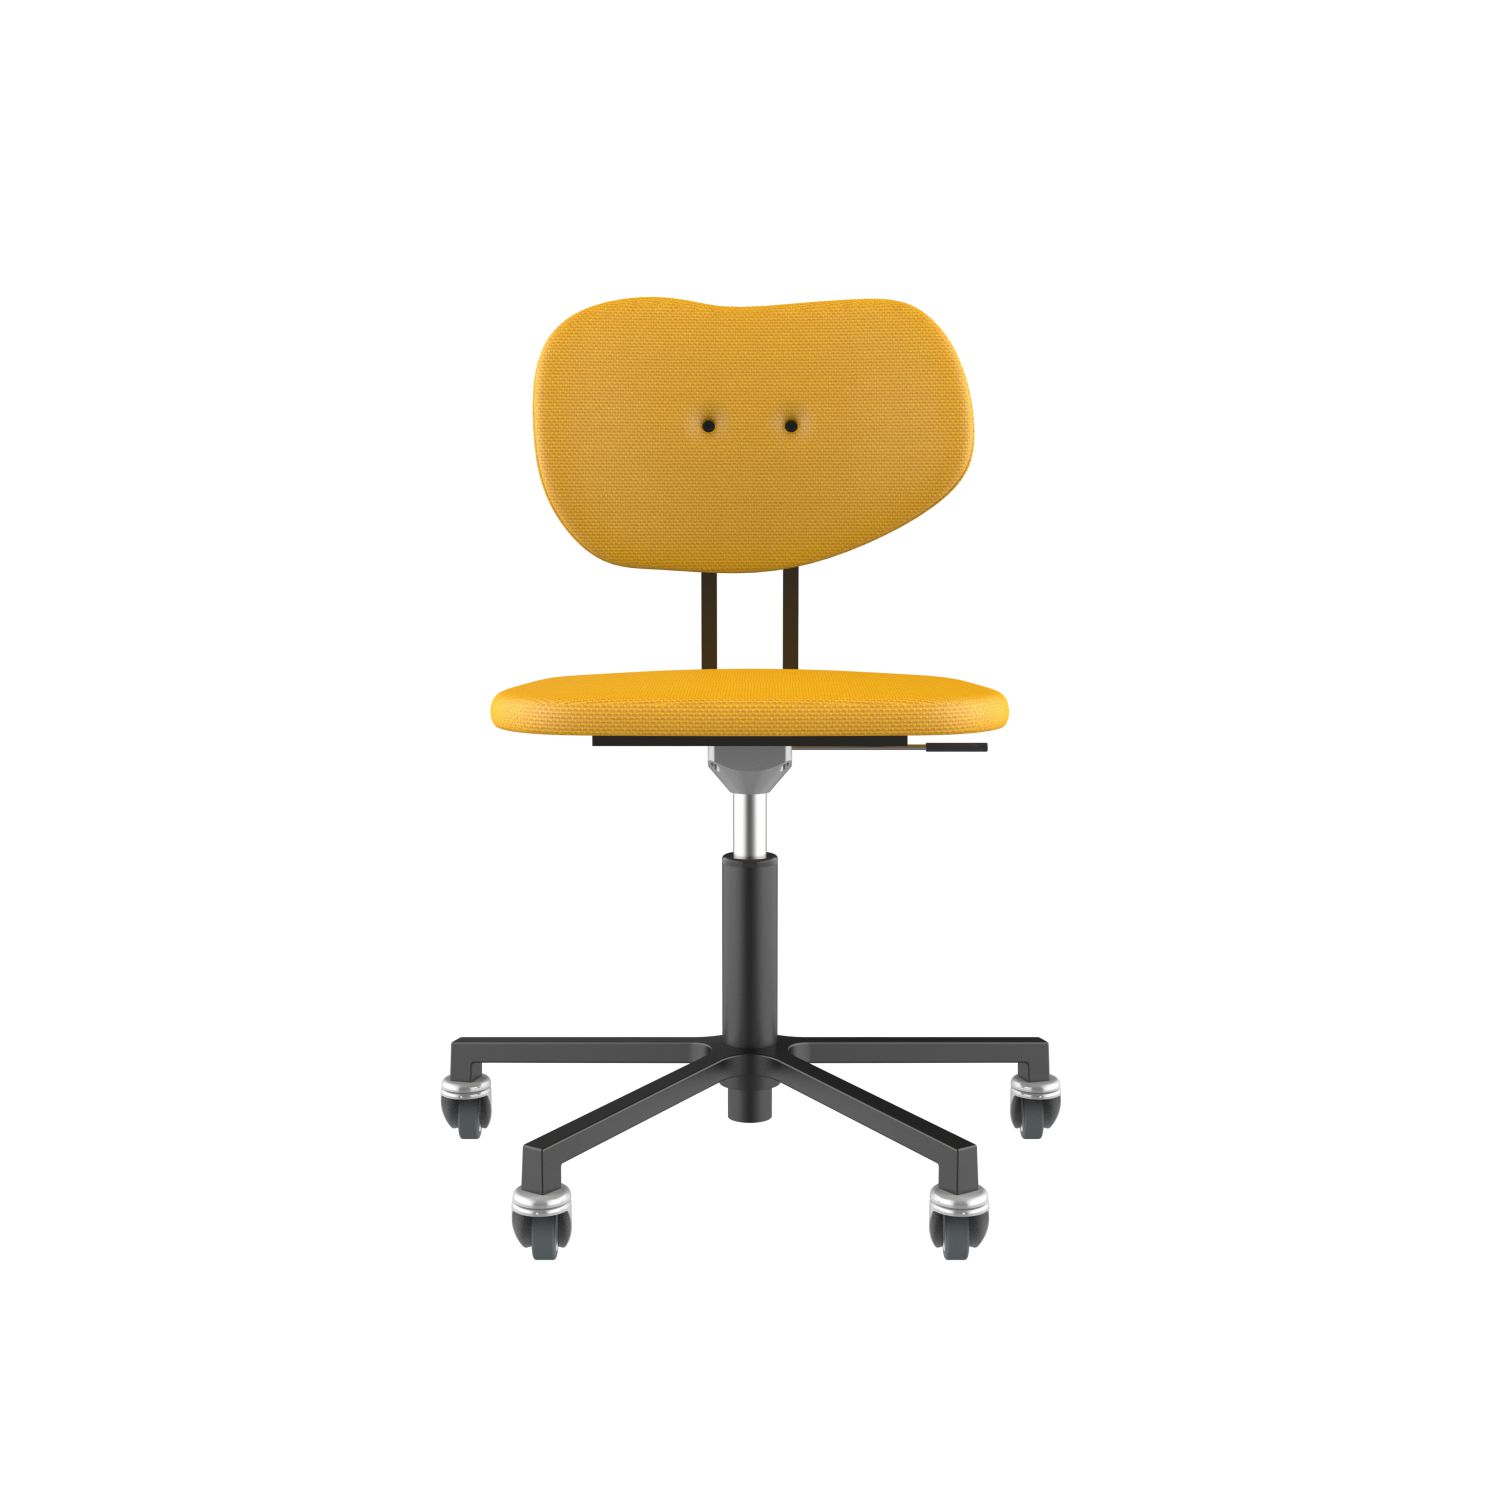 lensvelt maarten baas office chair without armrests backrest b lemon yellow 051 black ral9005 soft wheels